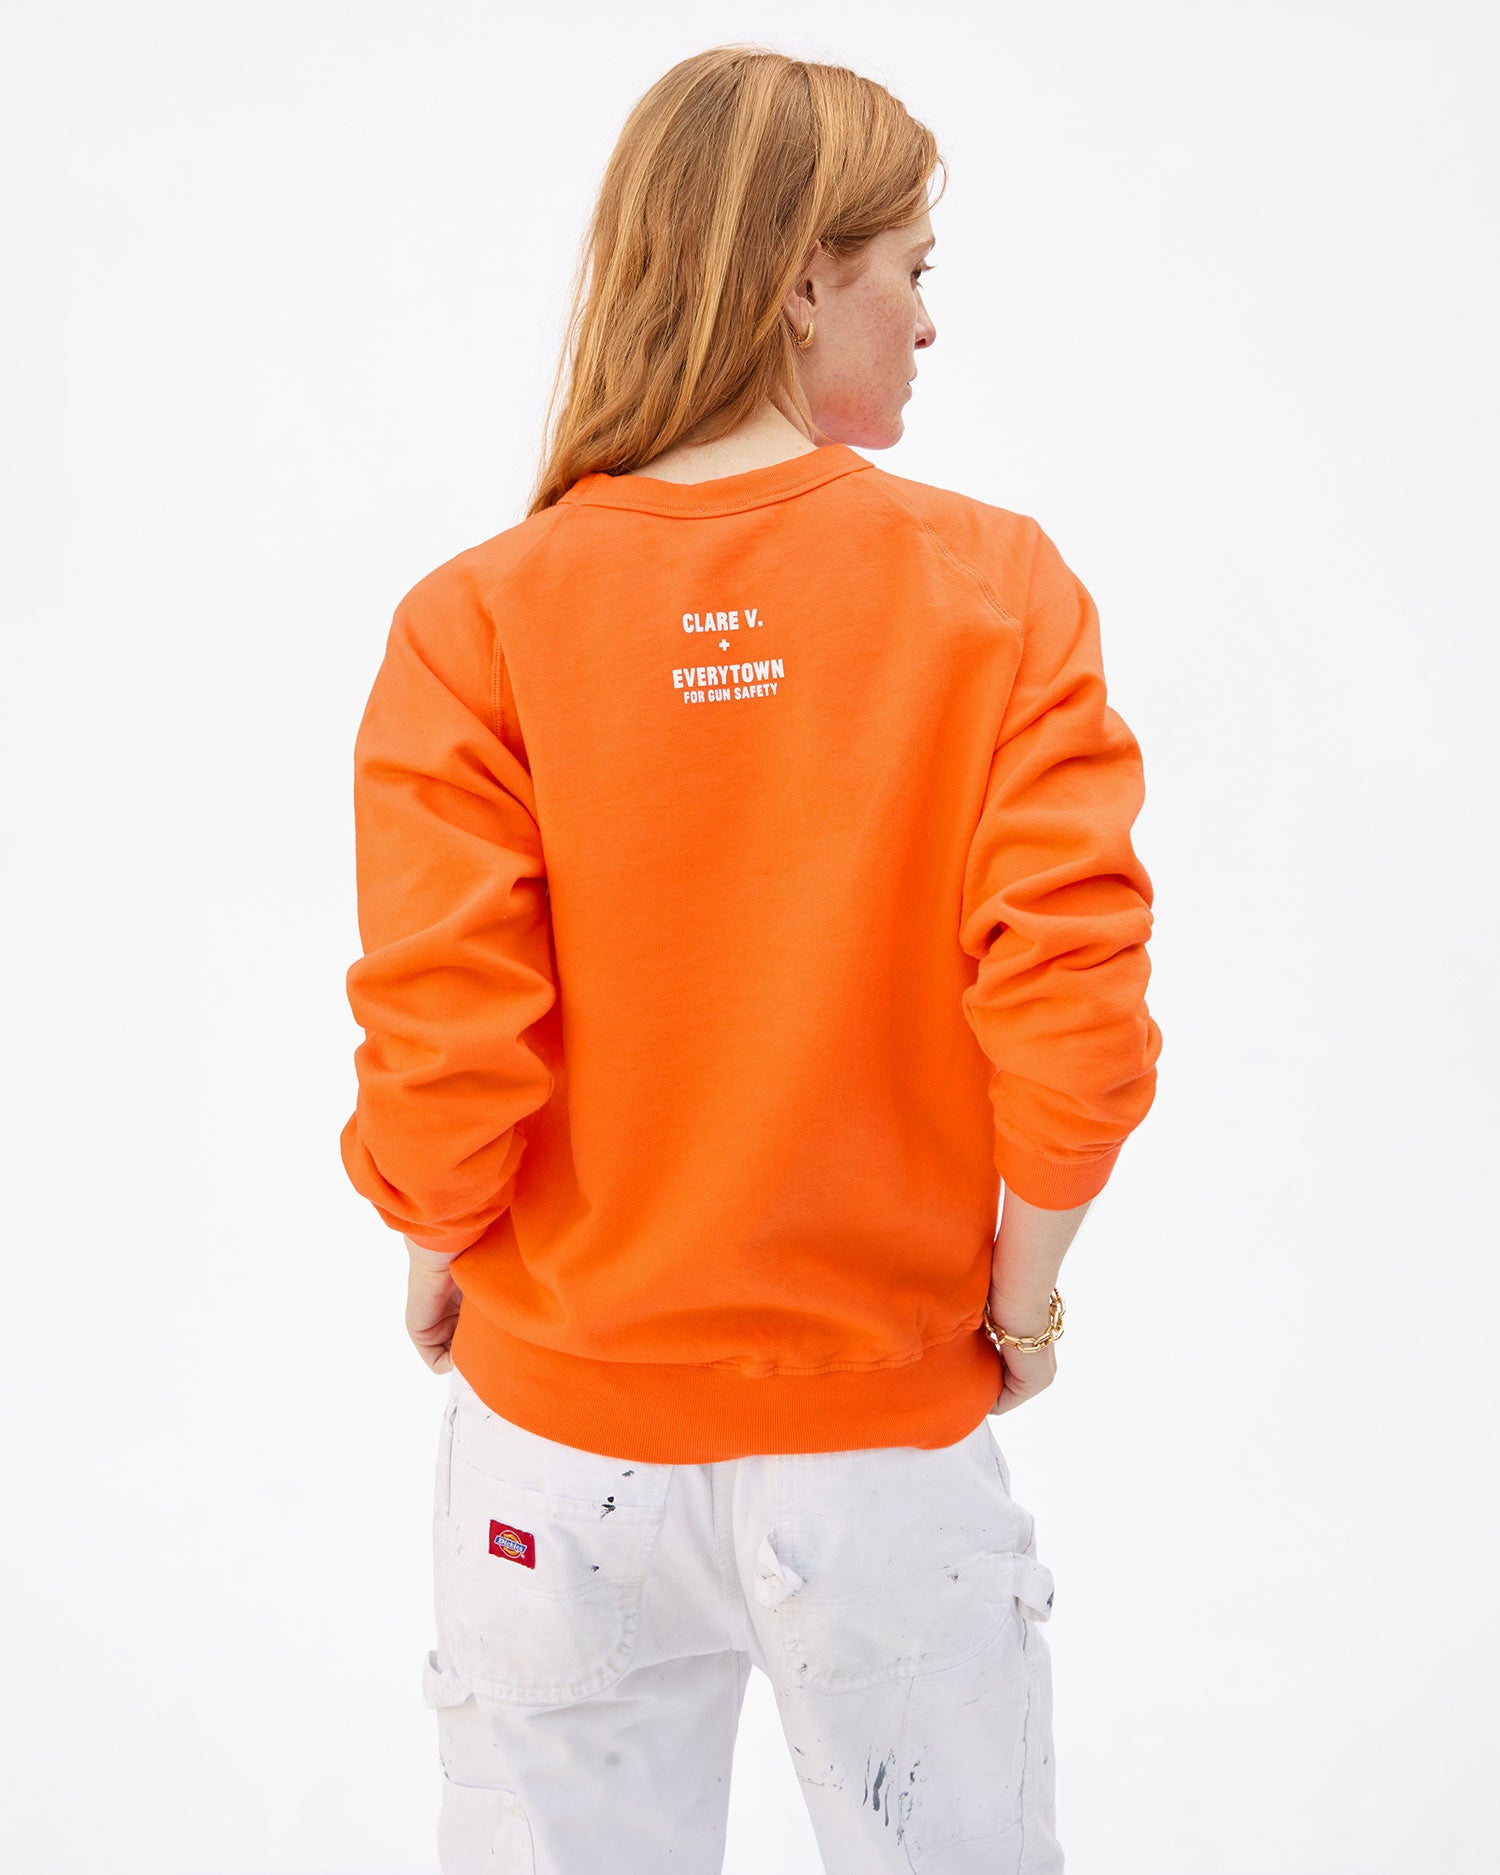 Back of the ÇA SUFFIT! sweatshirt in bright neon orange on Haley